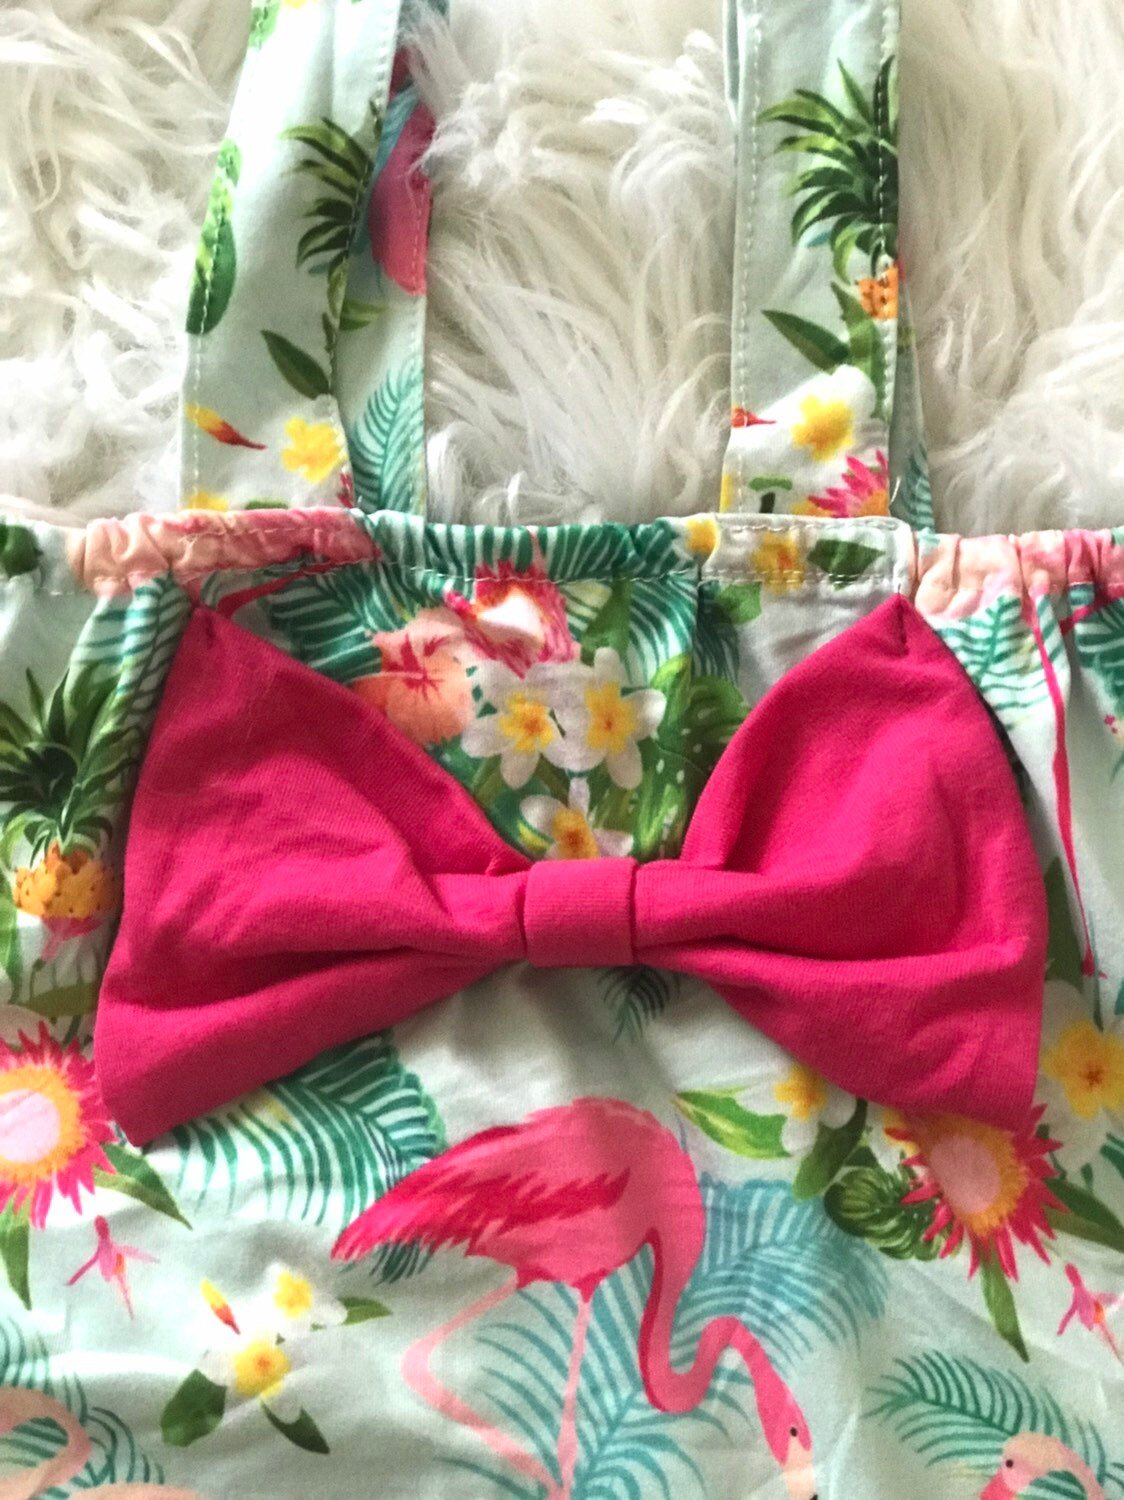 PINK FLAMINGO Summer Tank Shorts | Girls Flamingo Ruffle Shorts Outfit| Big Pink Bow Flamingo Toddler Outfit - Razels